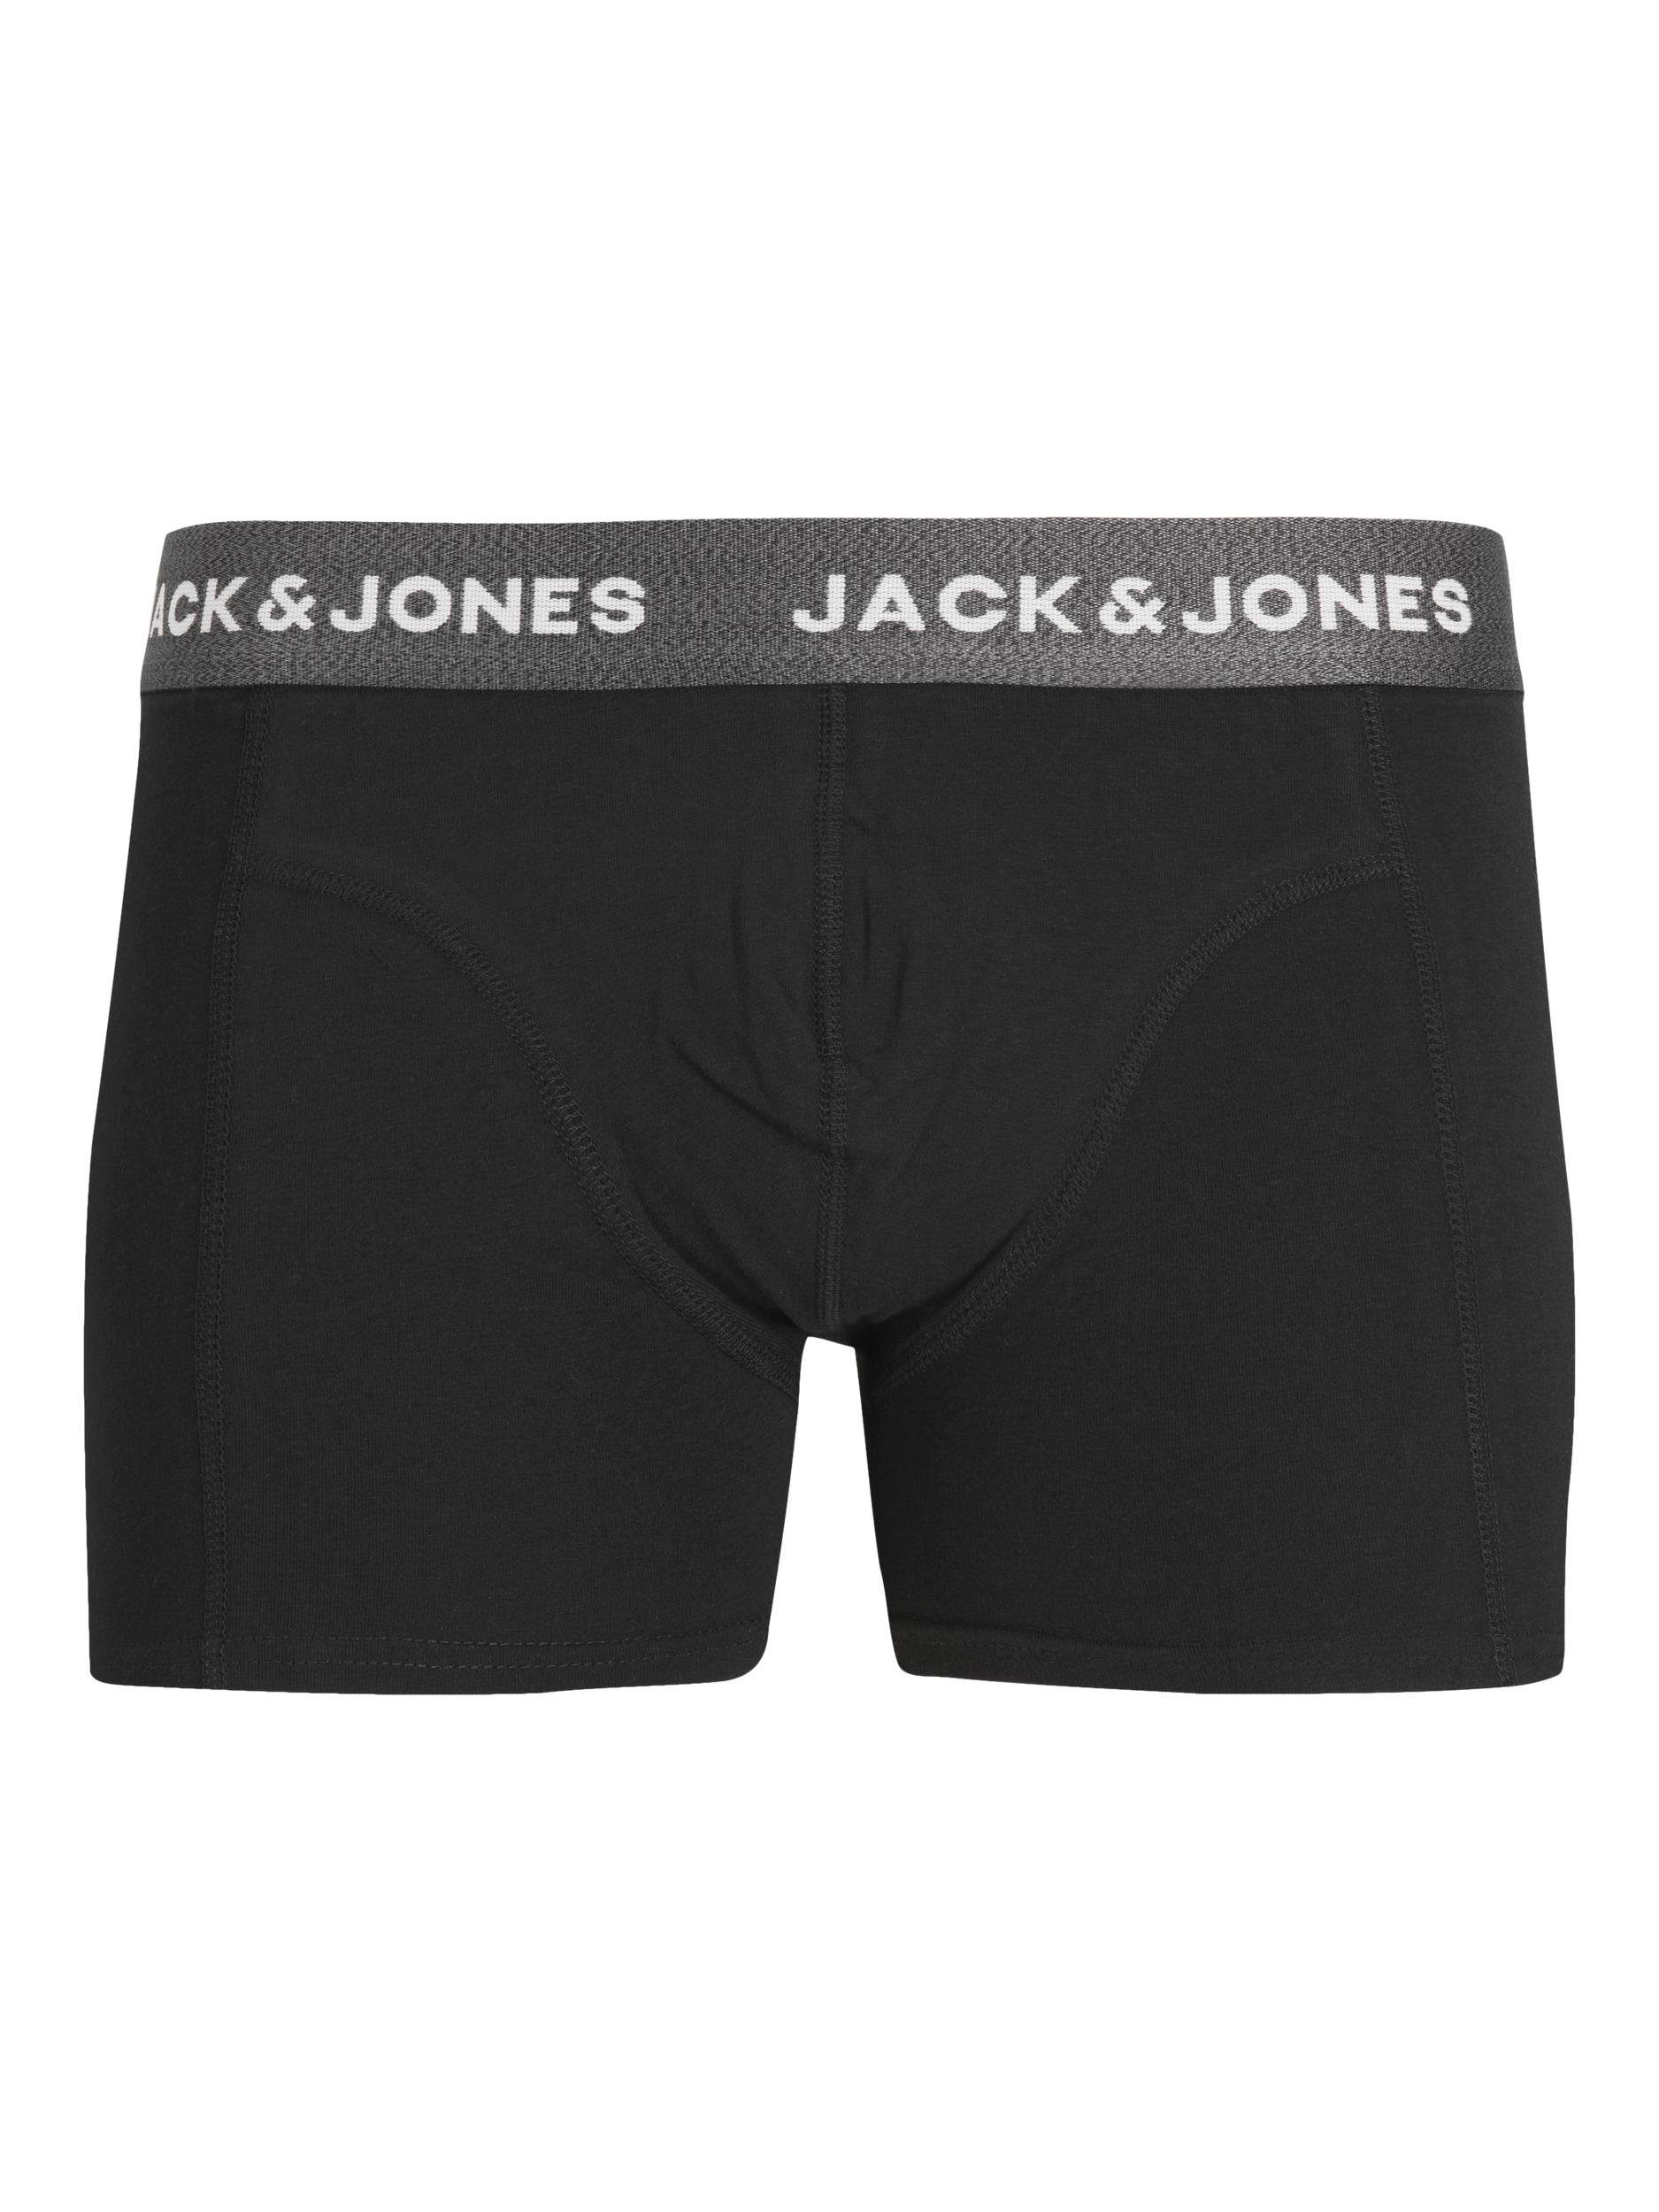 Jones Boxershorts & TRUNKS Pack JACBILL Boxershorts Shorts Jack 3er